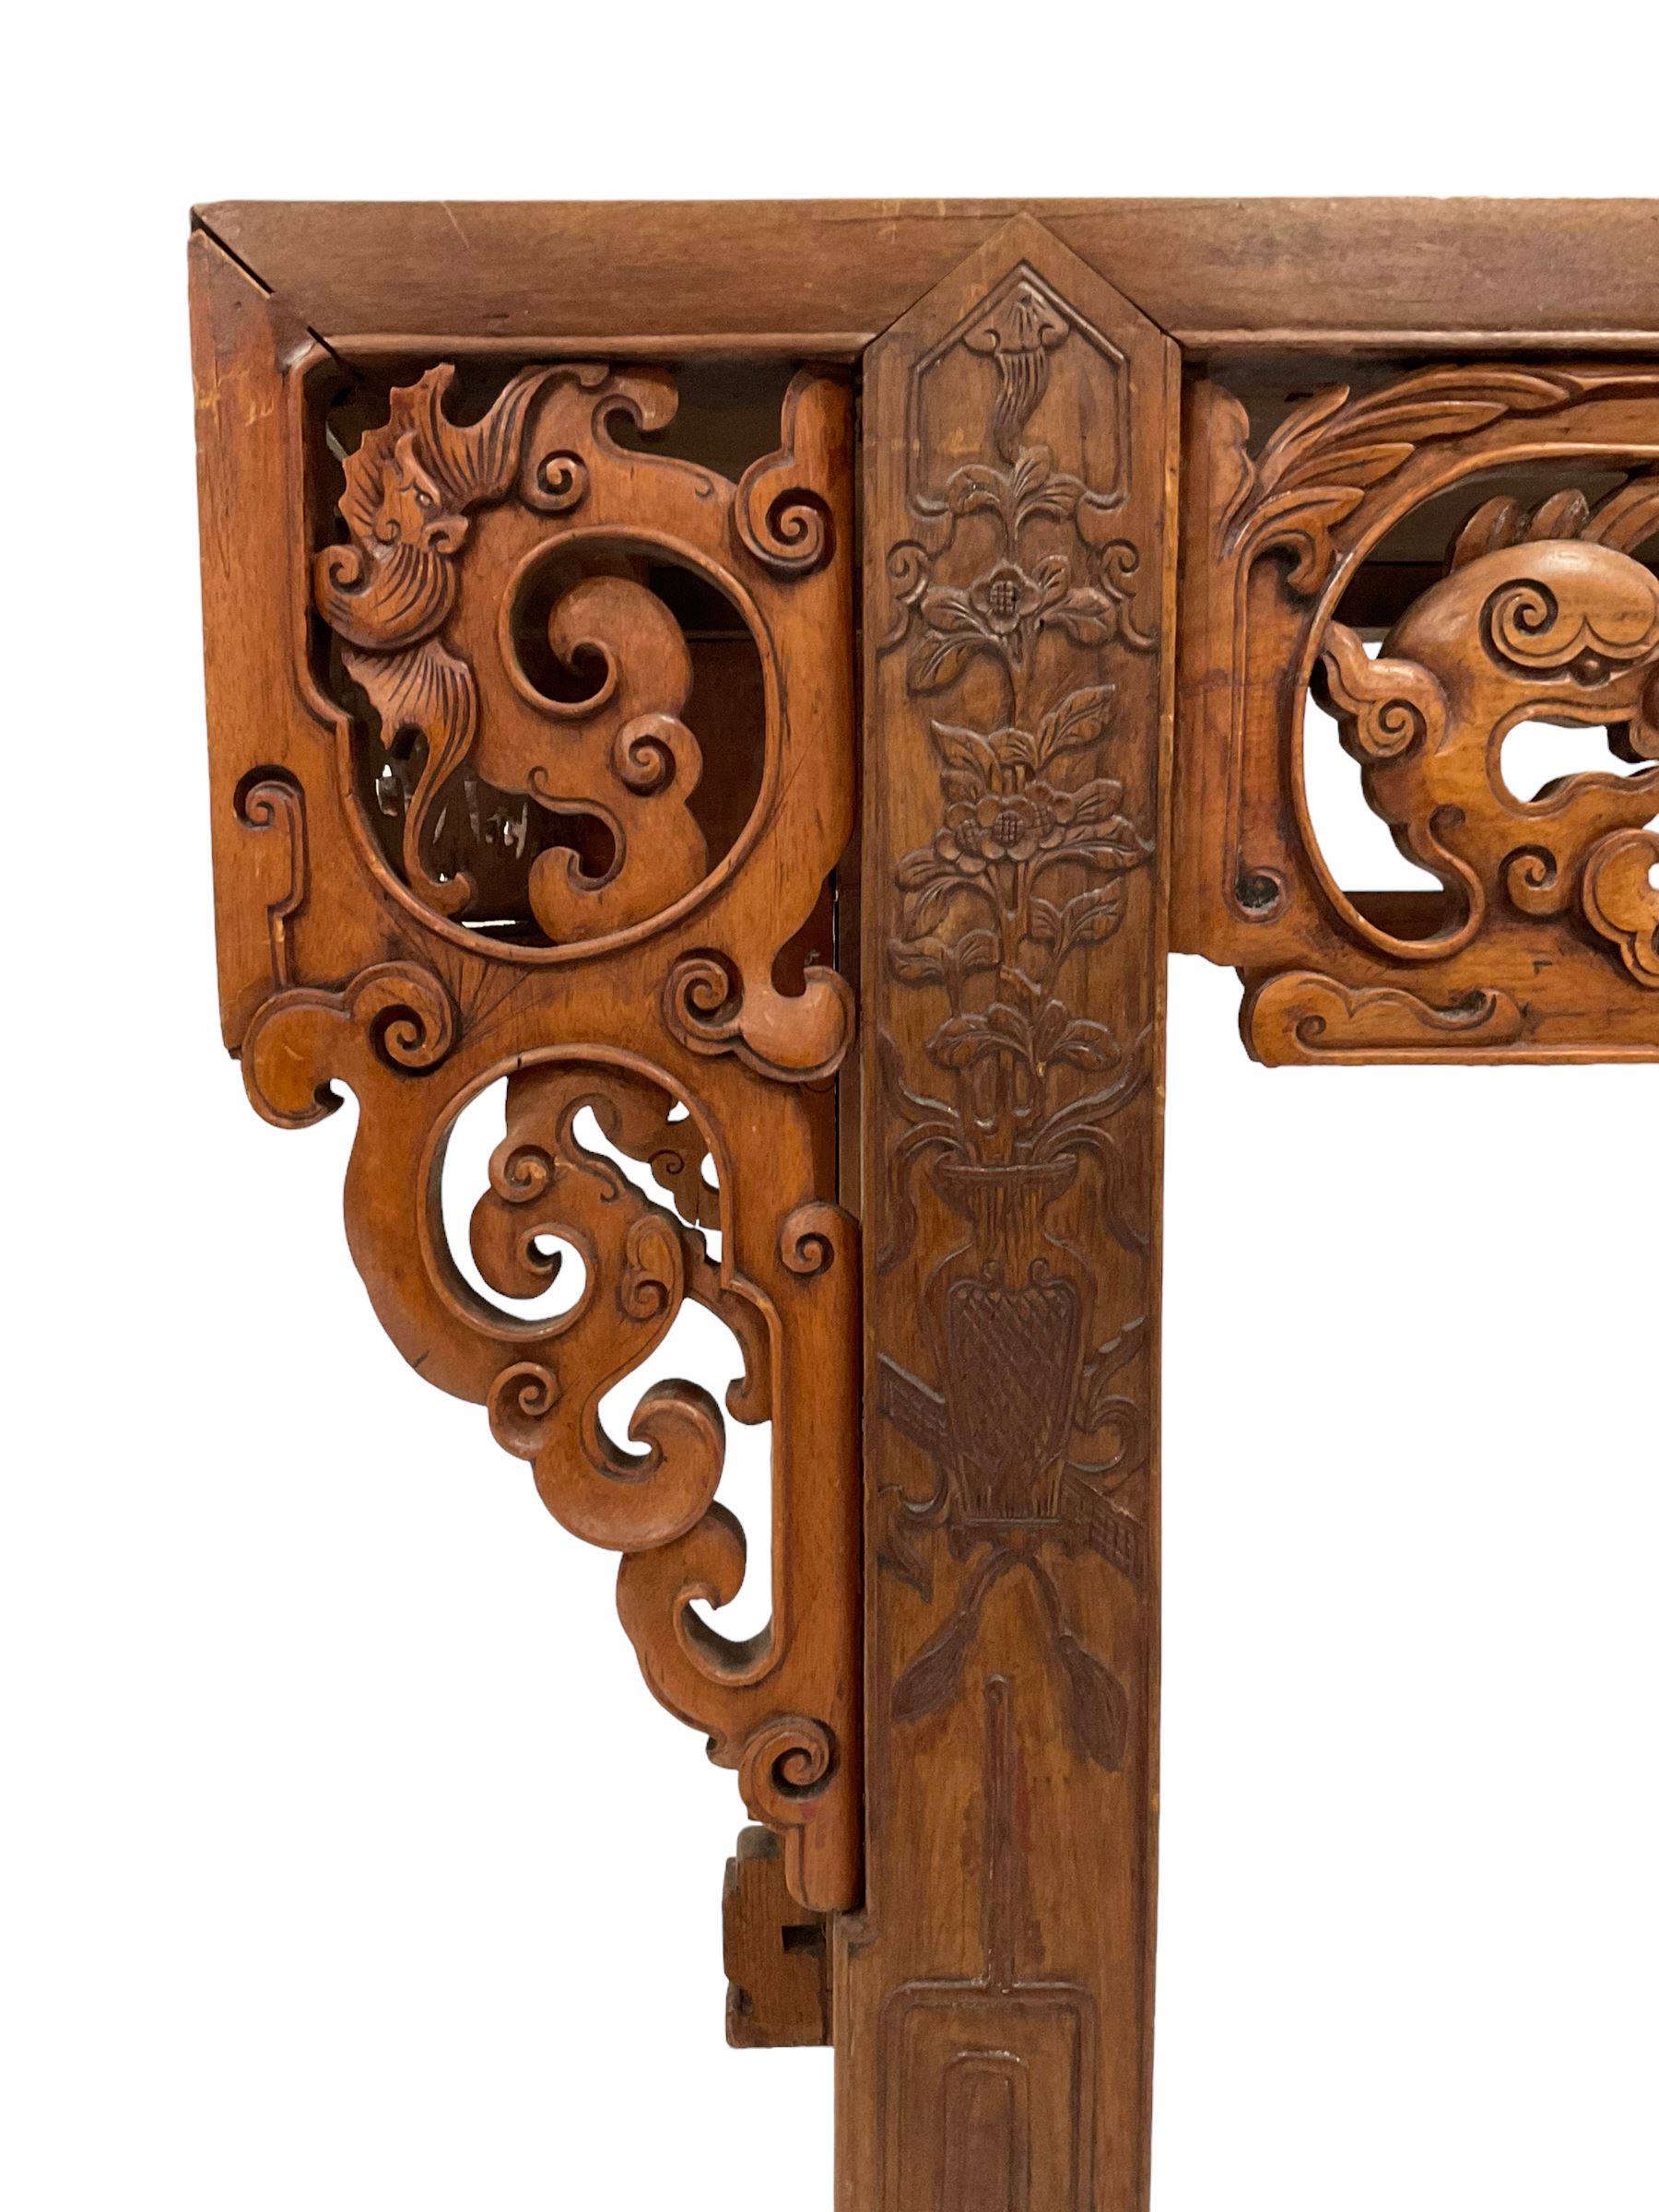 Large 19th century Chinese hardwood altar table - Image 9 of 11